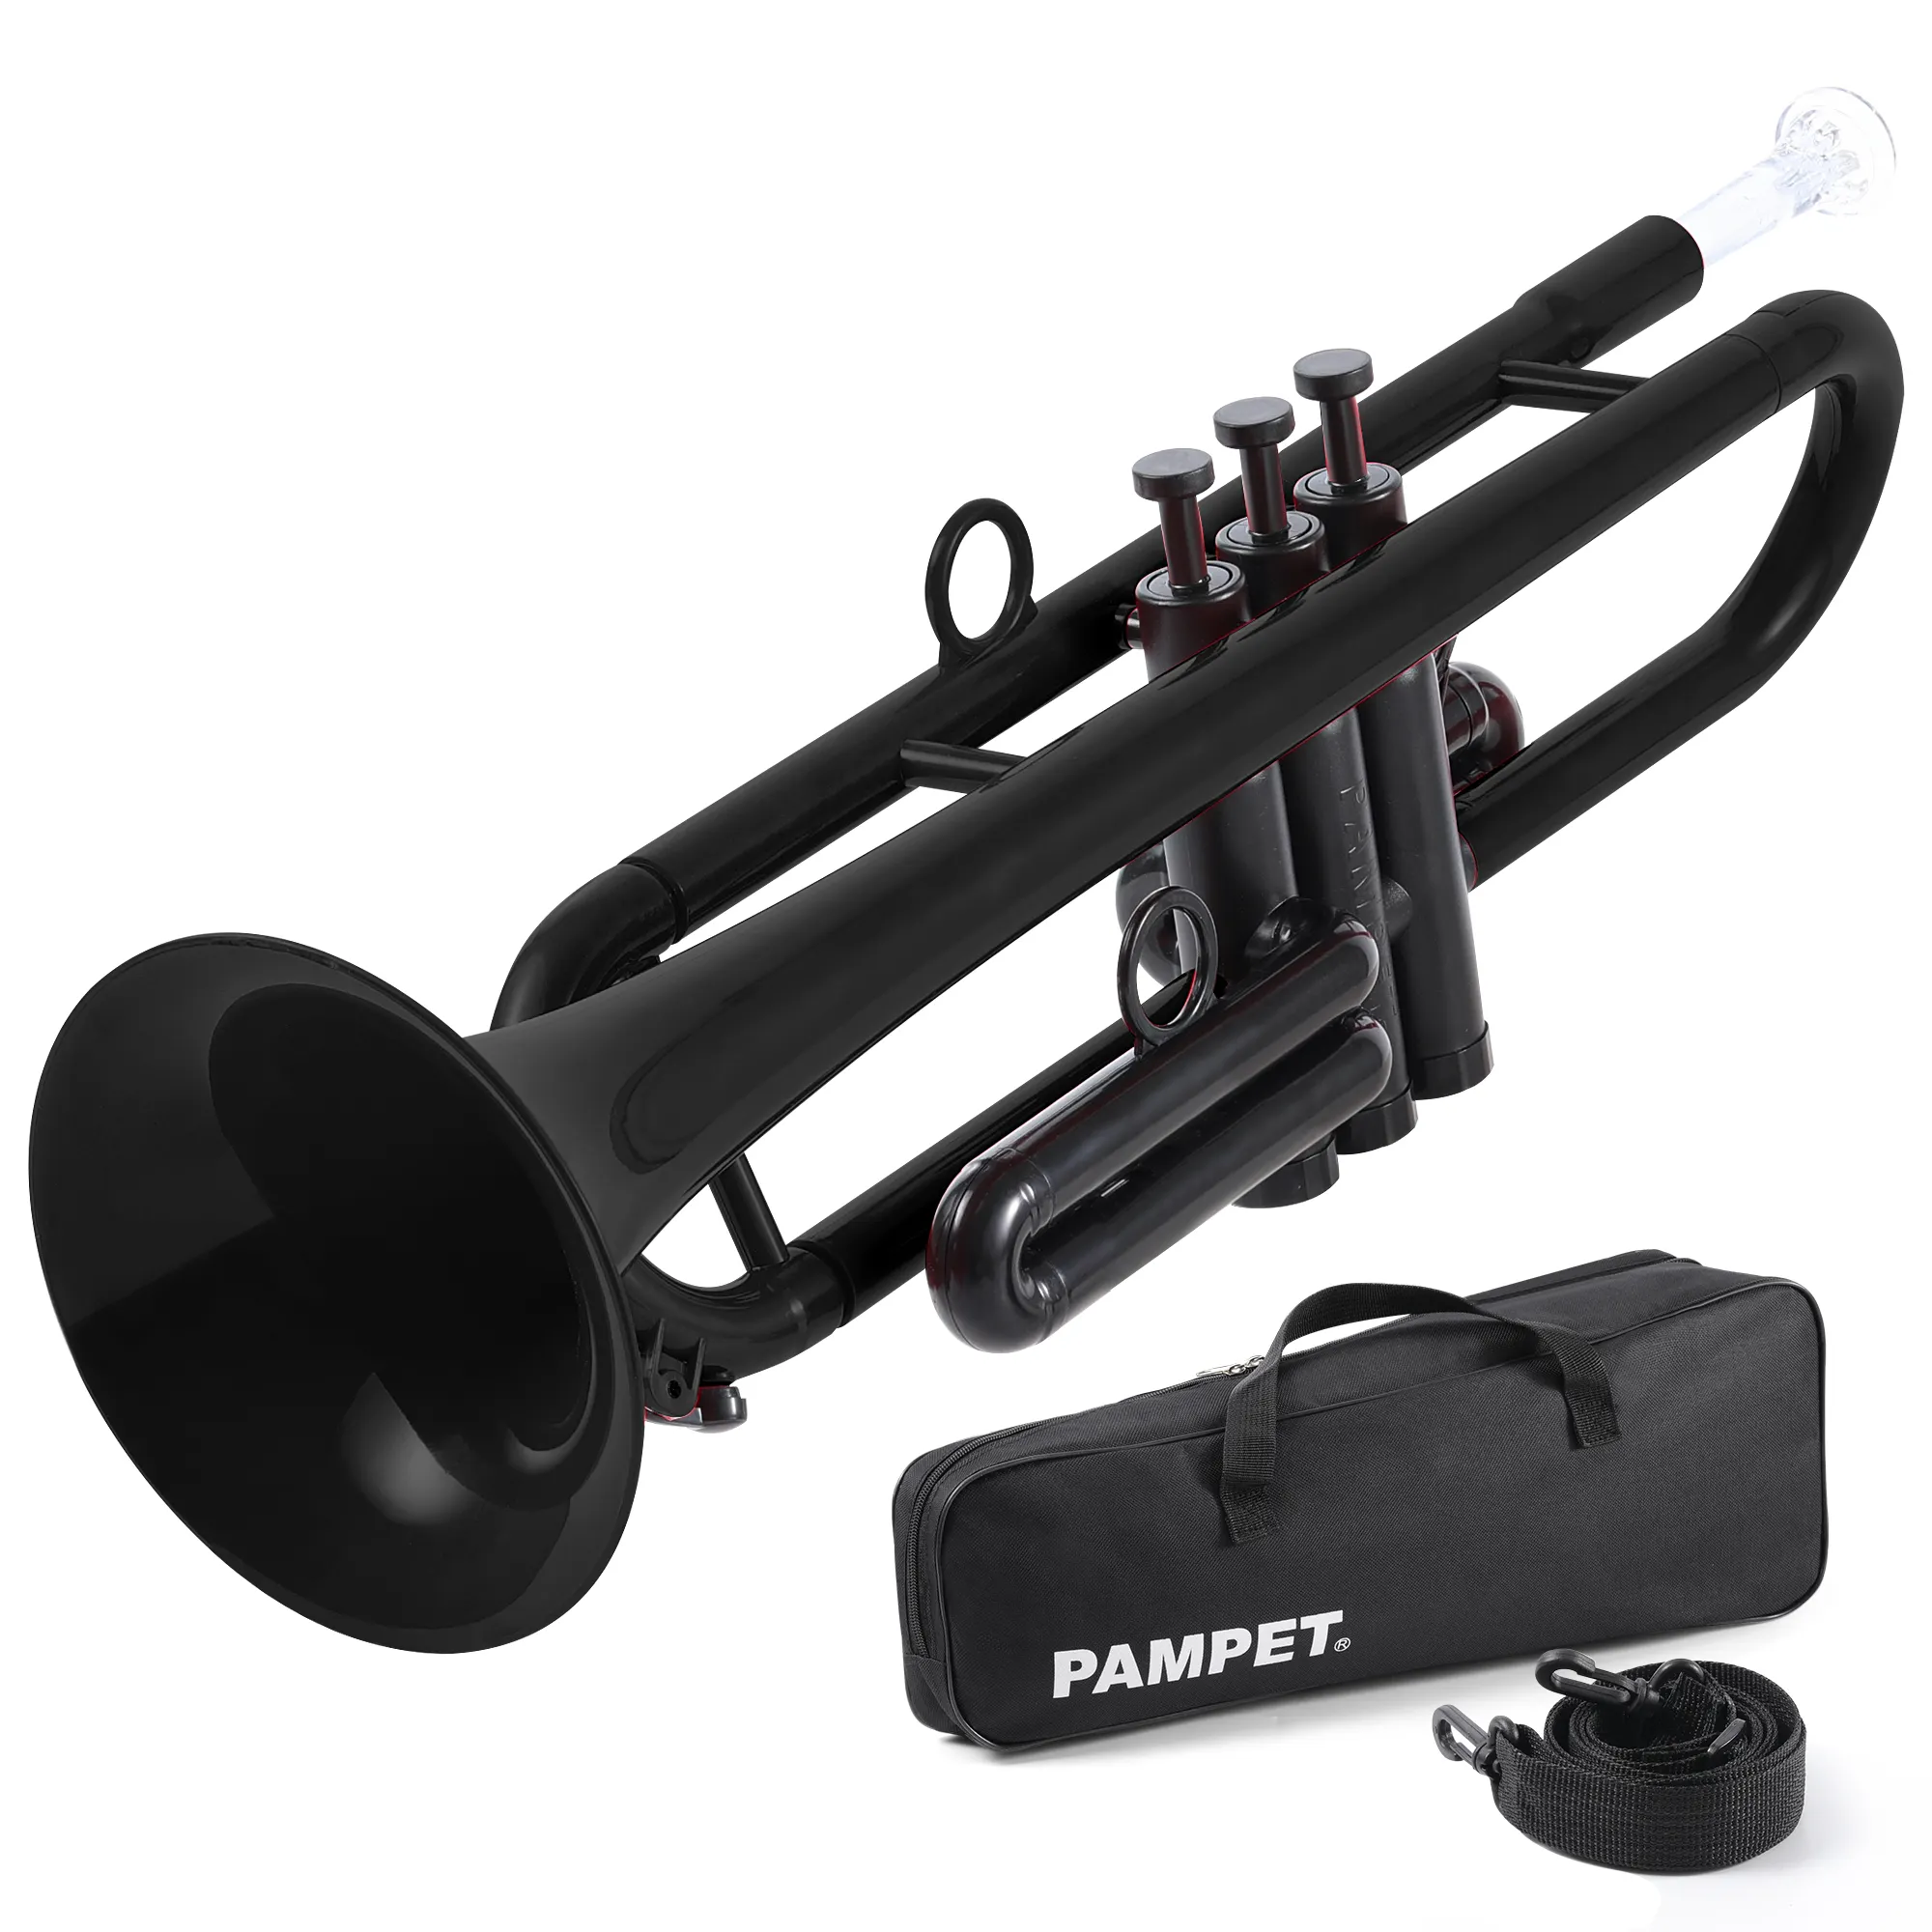 Trompeta de plástico para principiantes, instrumento Musical Bb estándar, color negro, con estuche de transporte, venta directa de fábrica